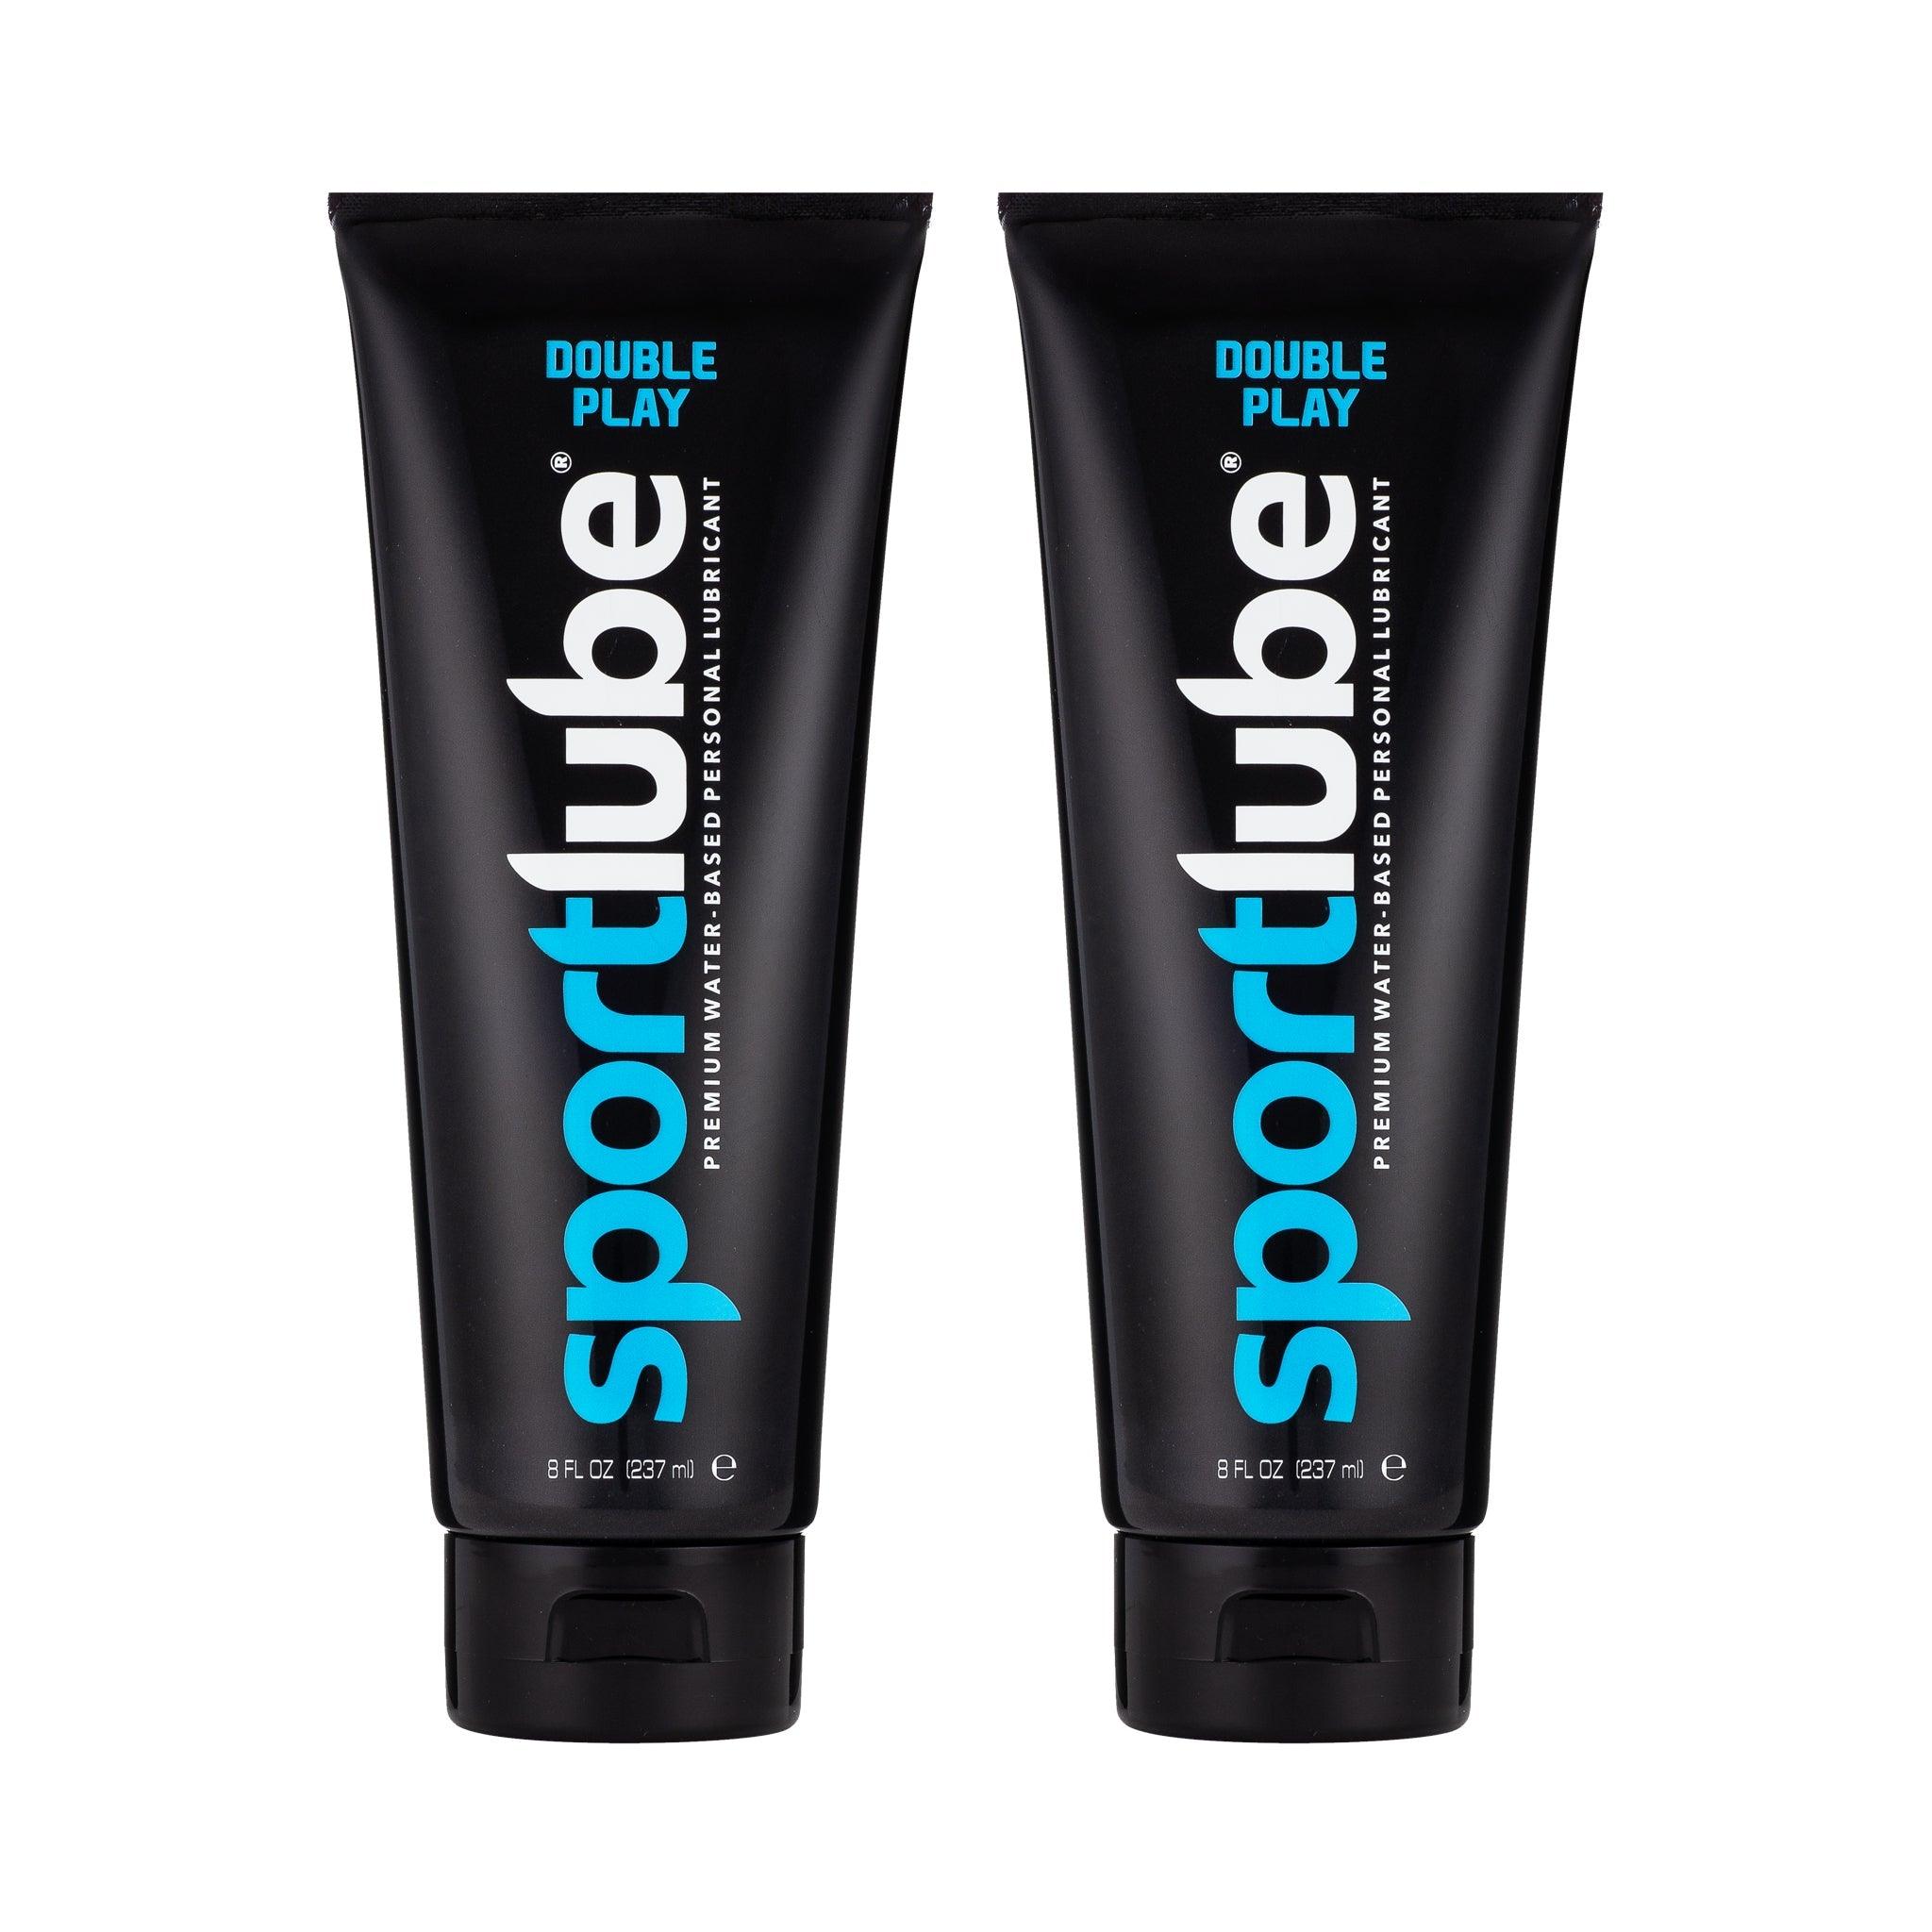 SportLube Double Play Premium Water-Based Personal Lubricant 8 oz (237 mL) Tube - CheapLubes.com